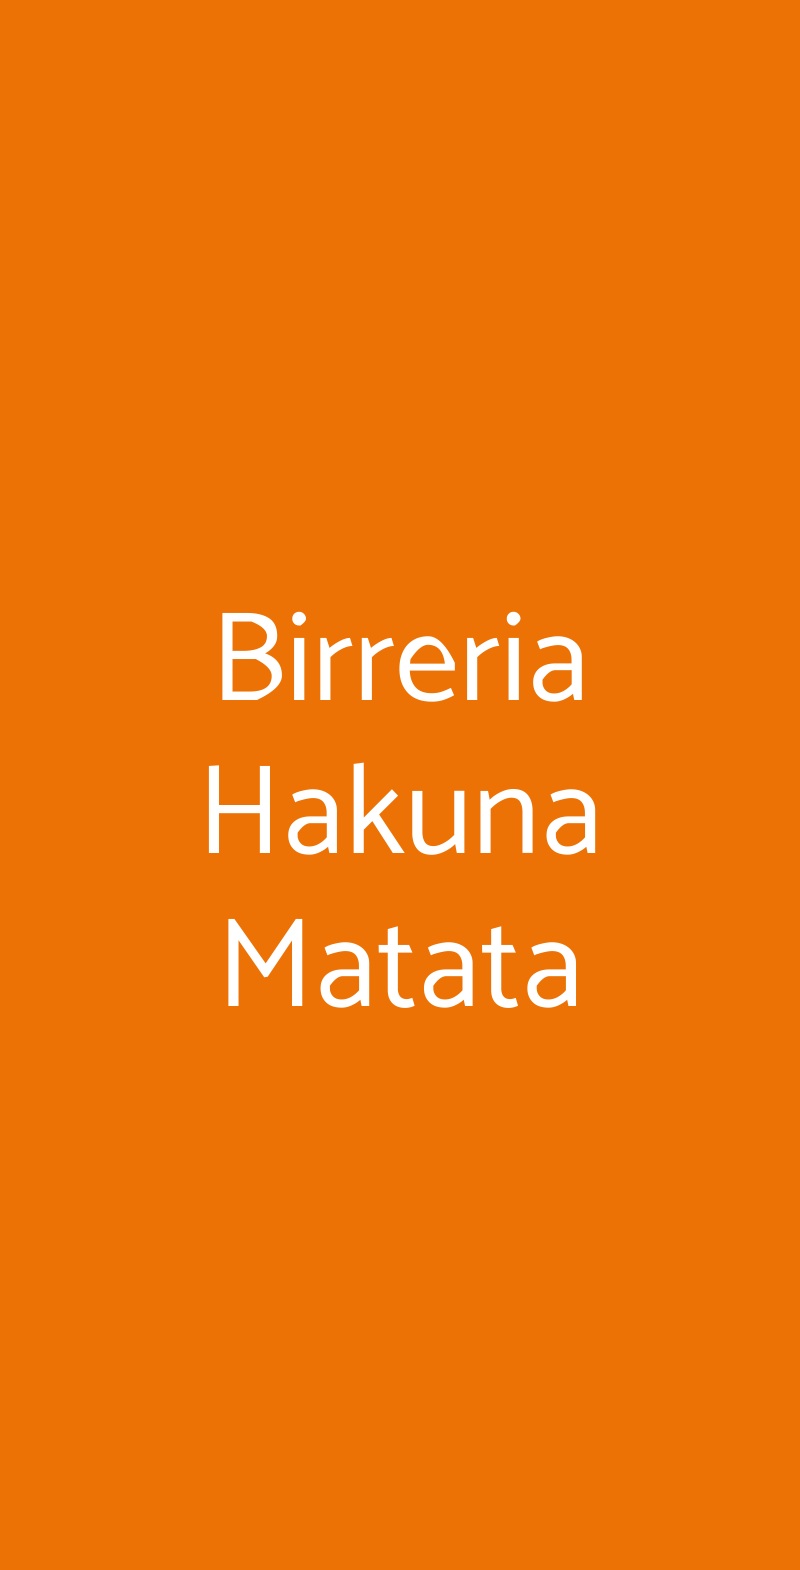 Birreria Hakuna Matata Cerea menù 1 pagina